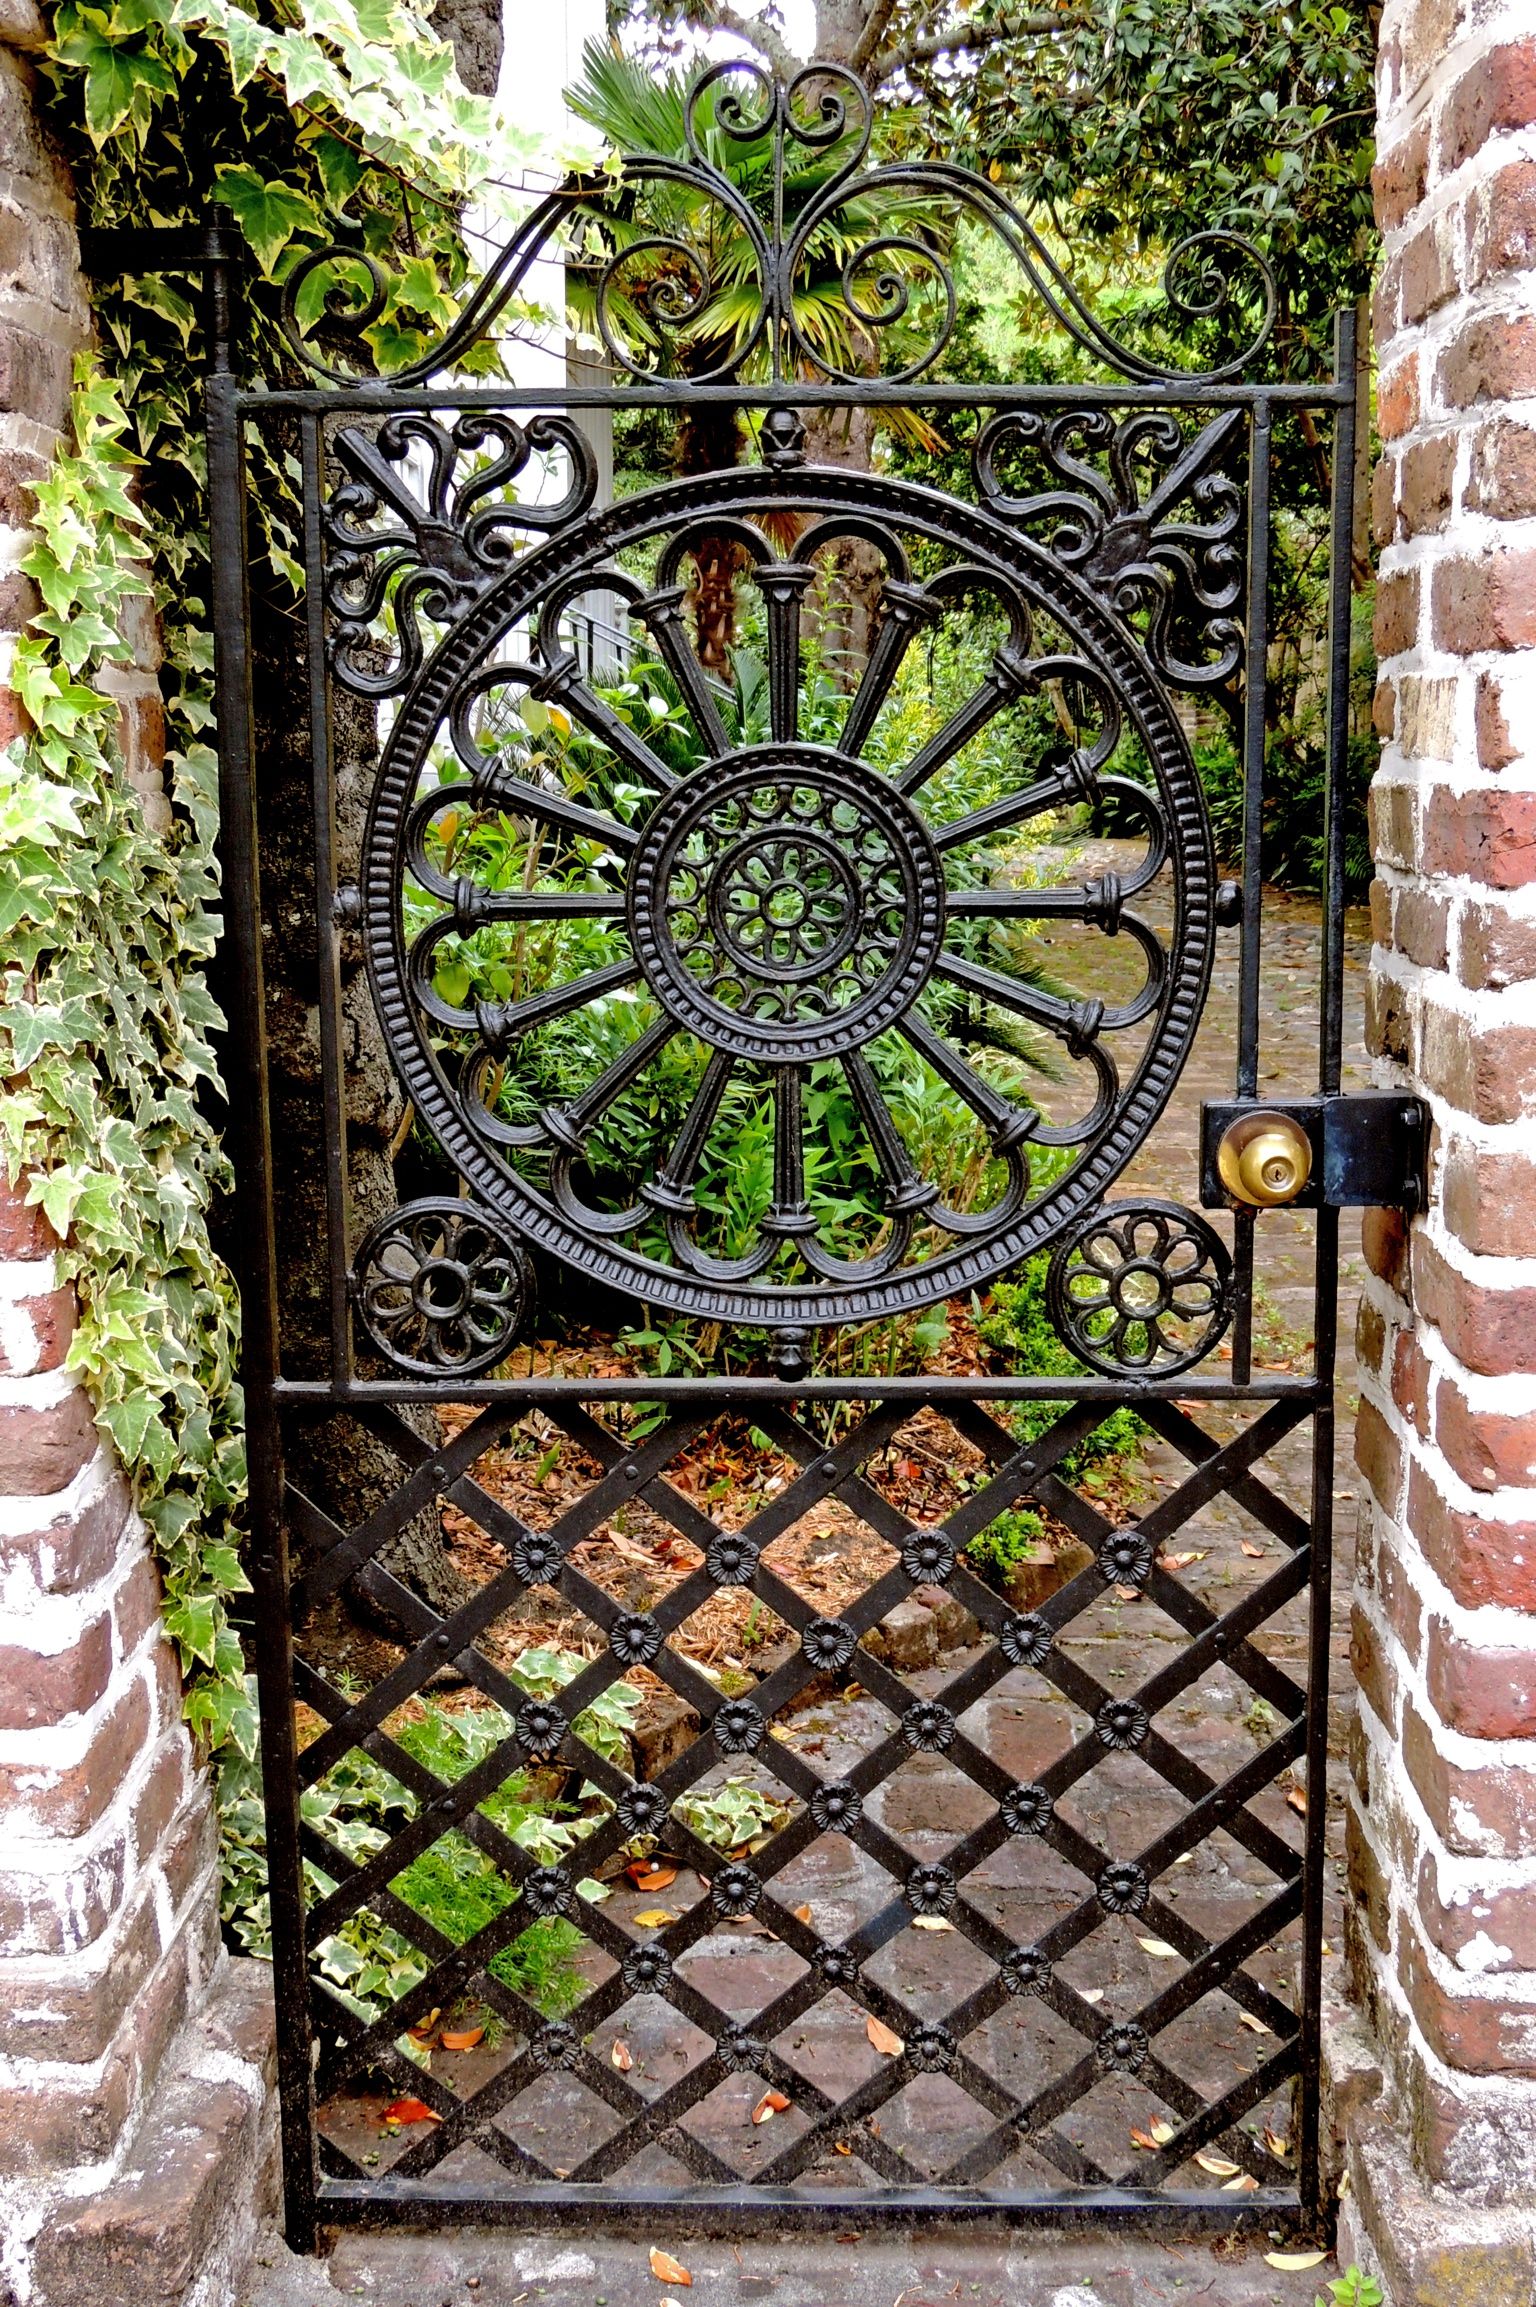 Wrought Iron Garden Gates